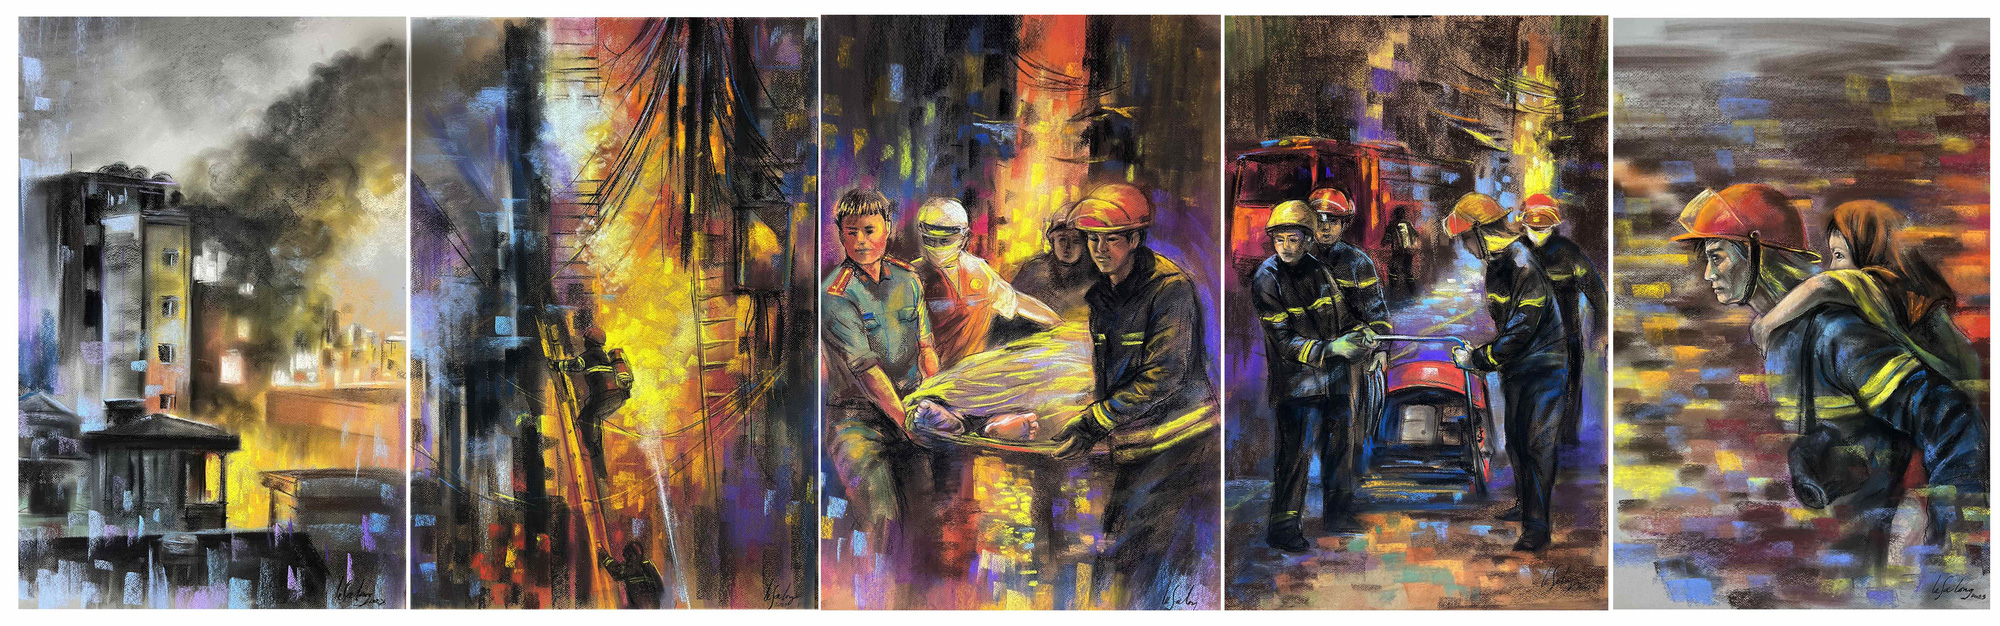 Painter dedicates artworks to victims, rescuers of tragic Hanoi fire